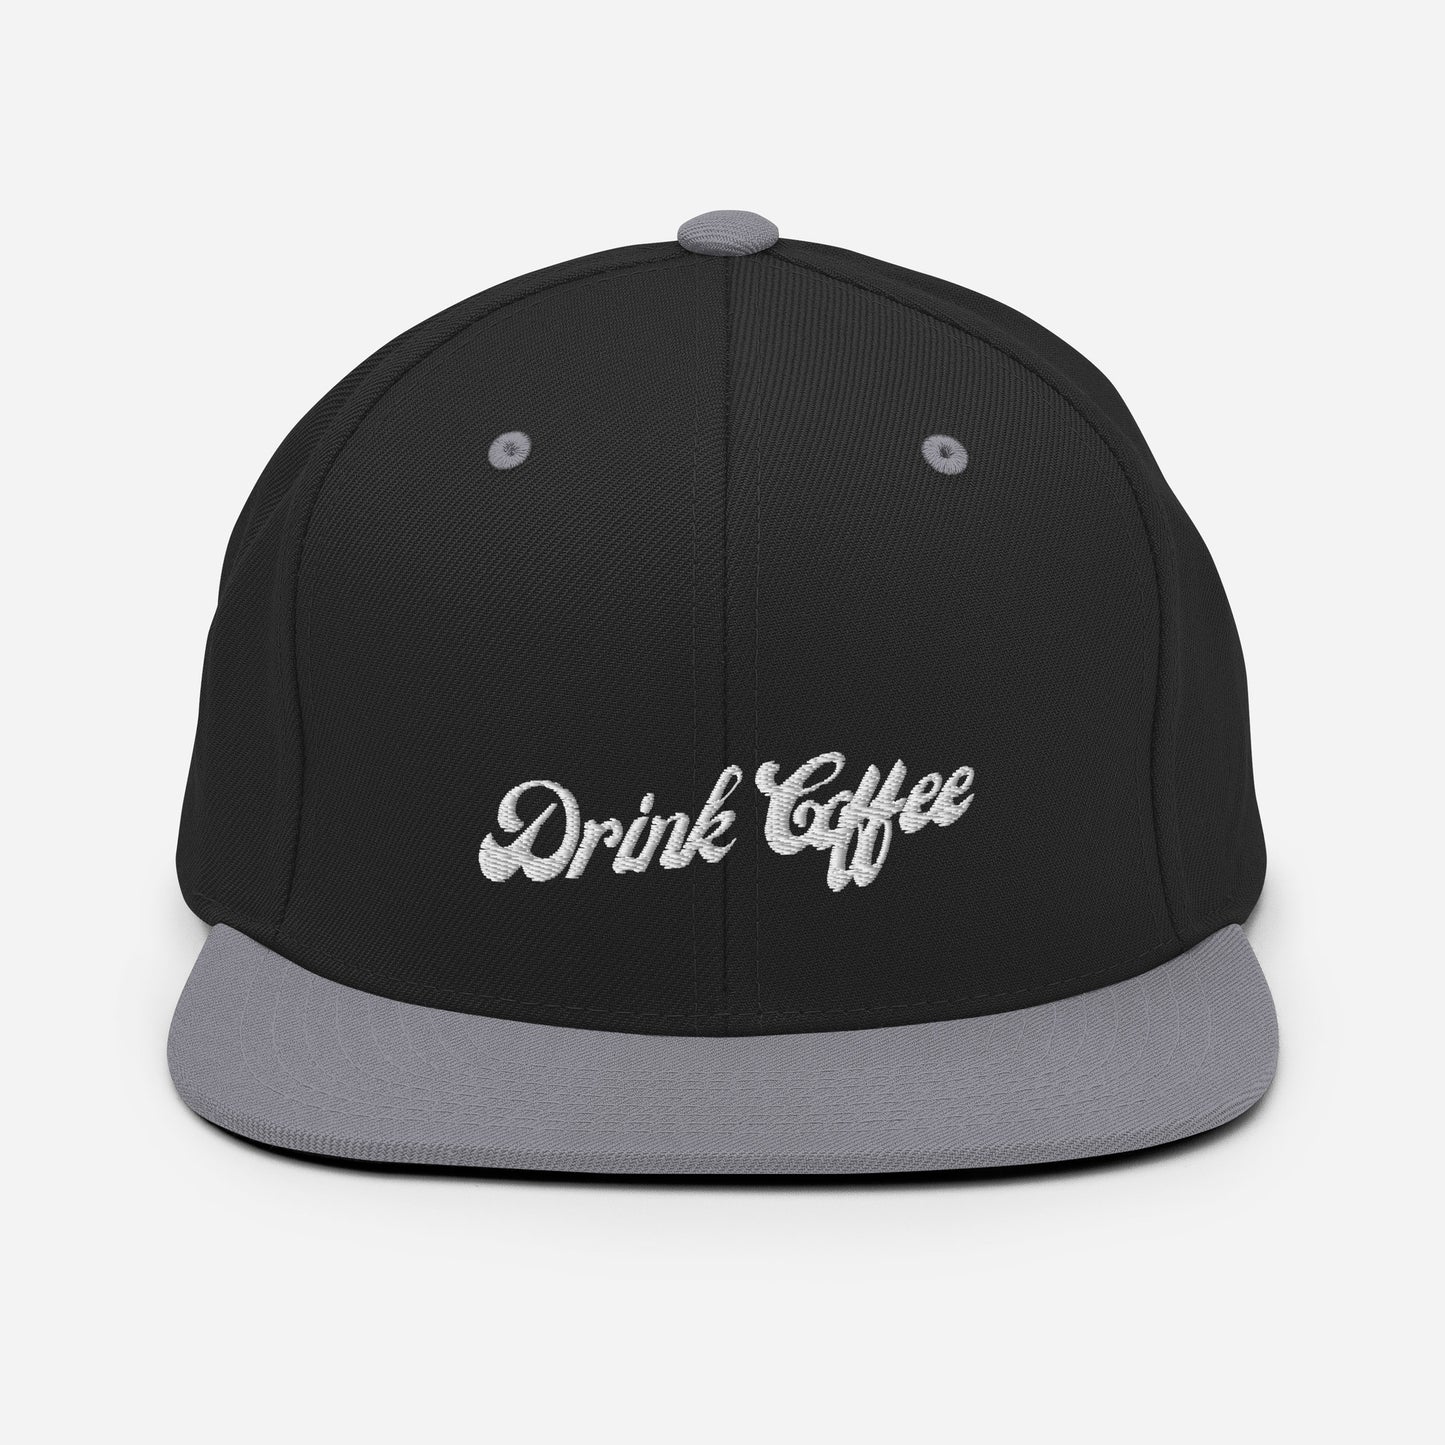 "Drink Coffee" Snapback Hat